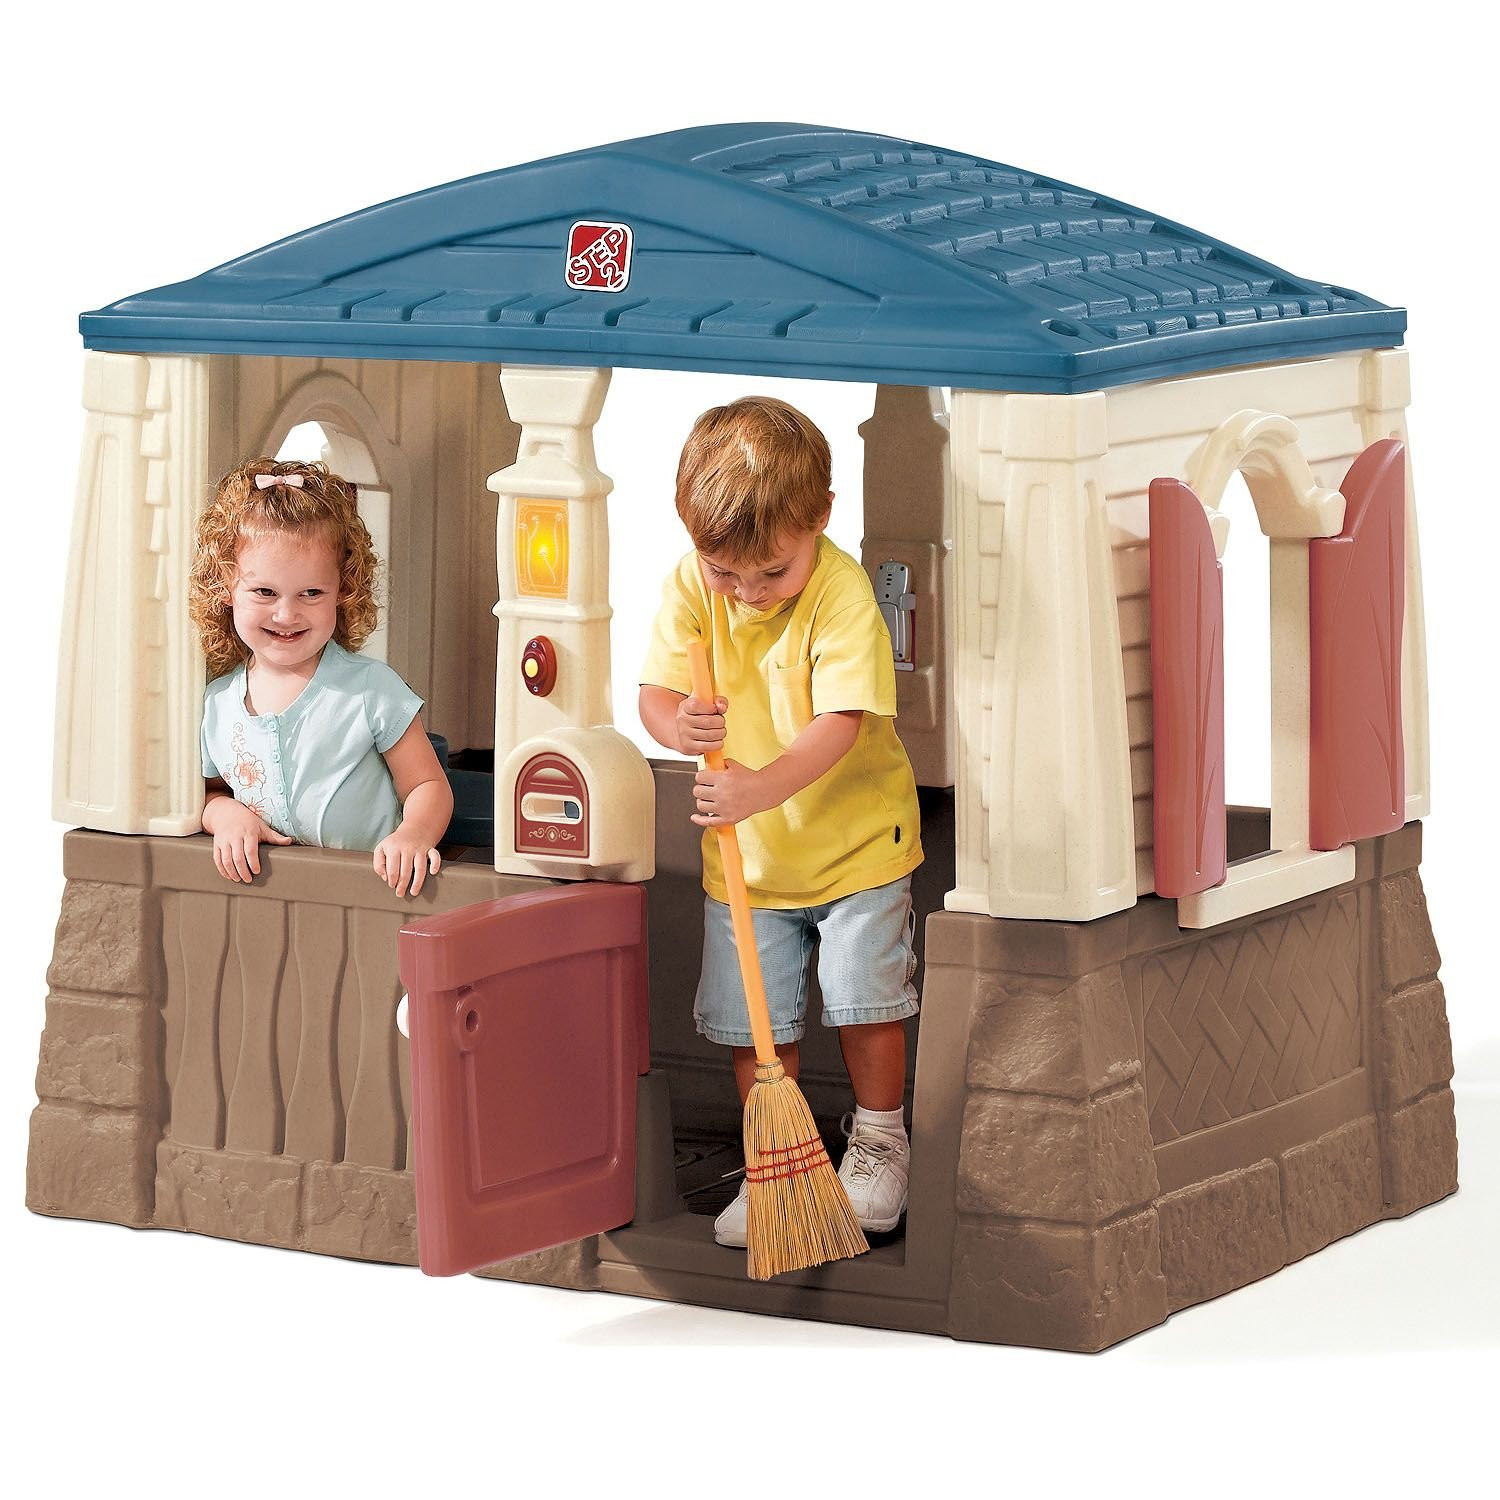 Kids Outdoor Plastic Playhouse
 Plastic Playhouse for Kids – fel7